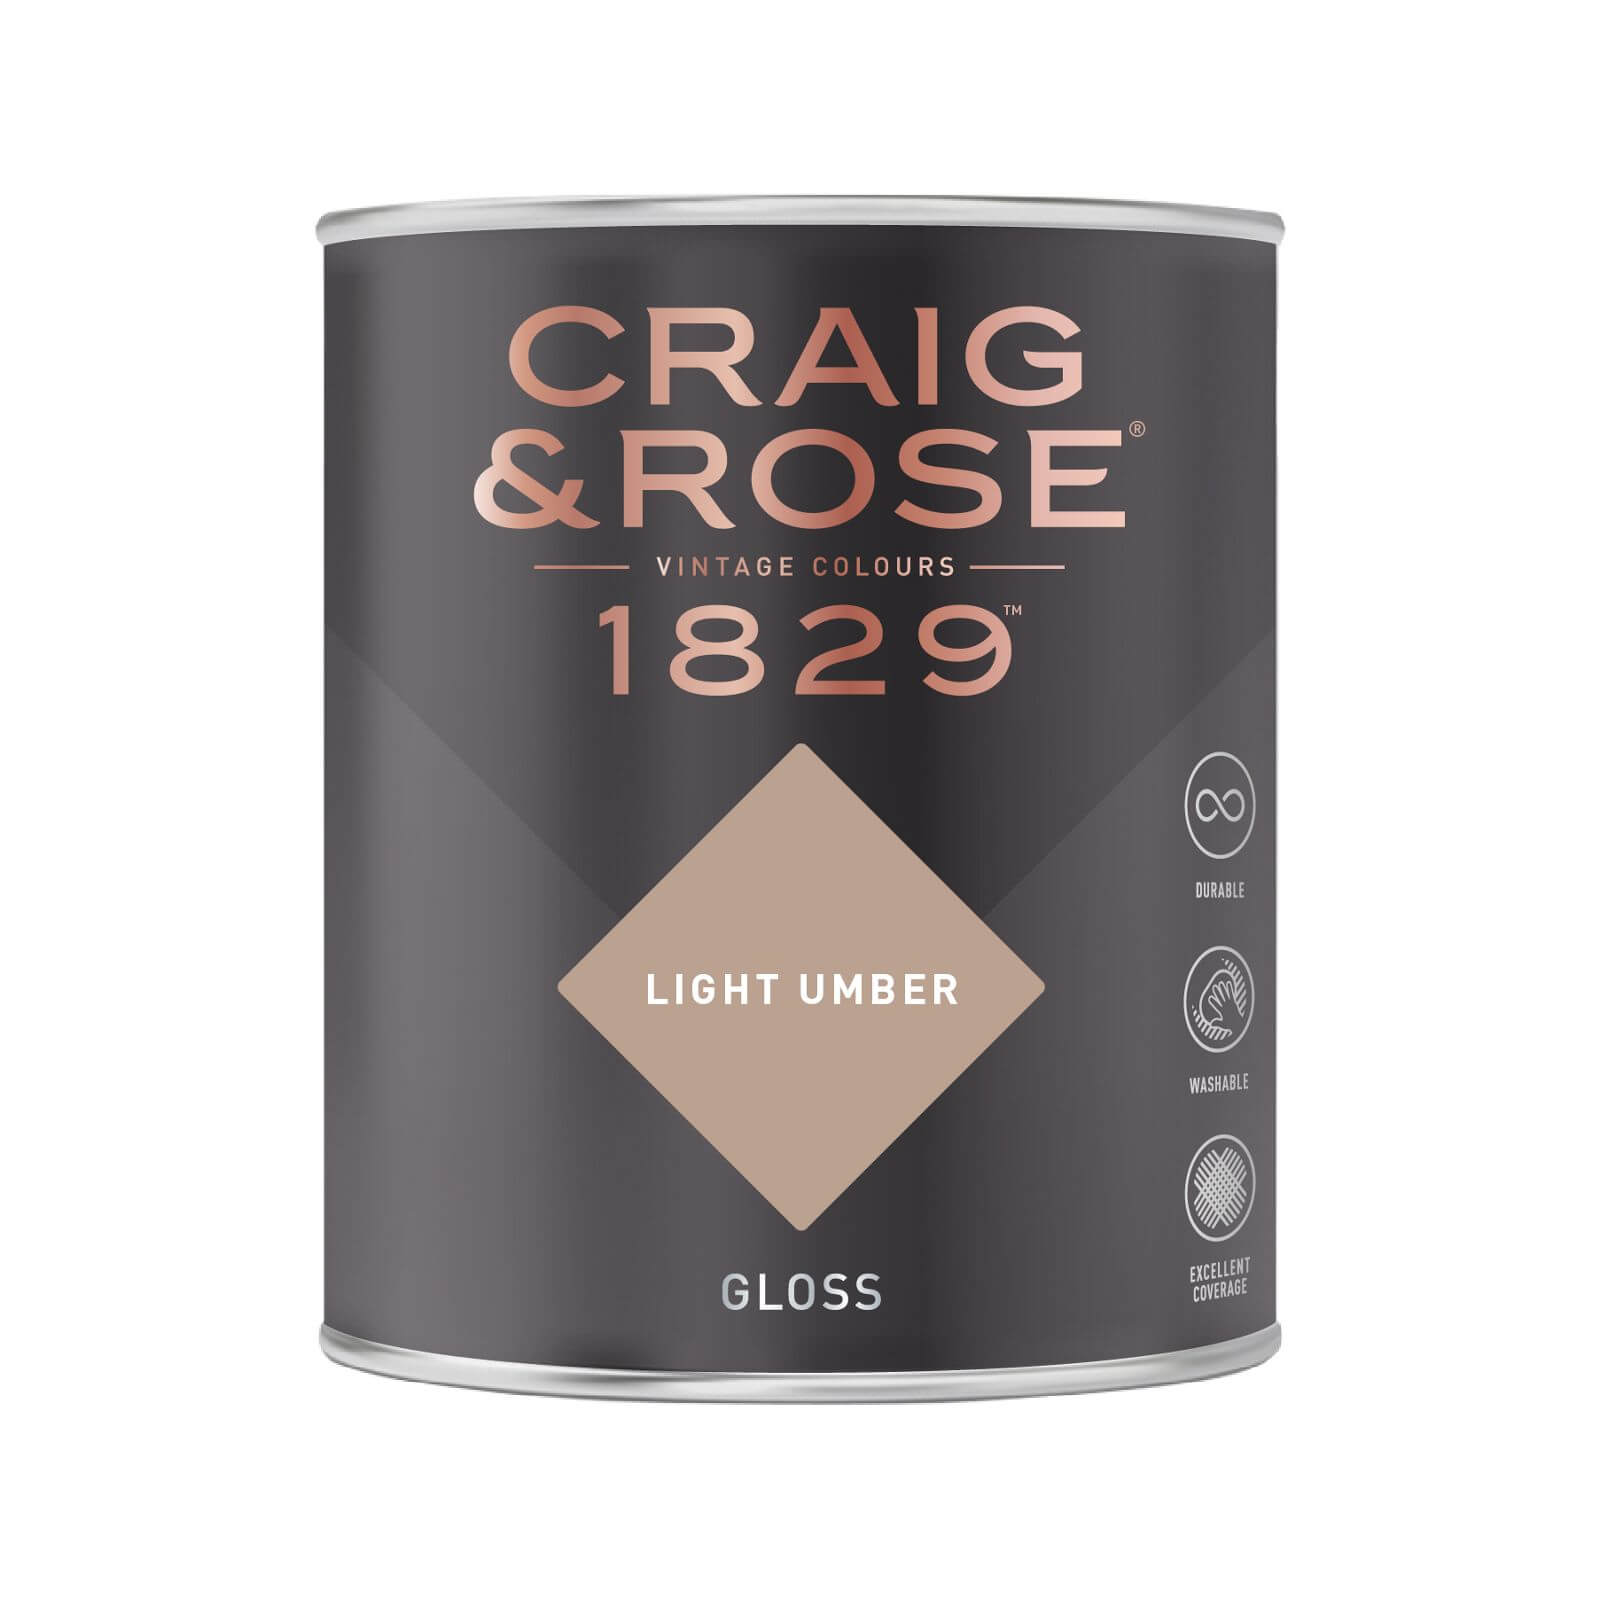 Craig & Rose 1829 Gloss Paint Light Umber - 750ml